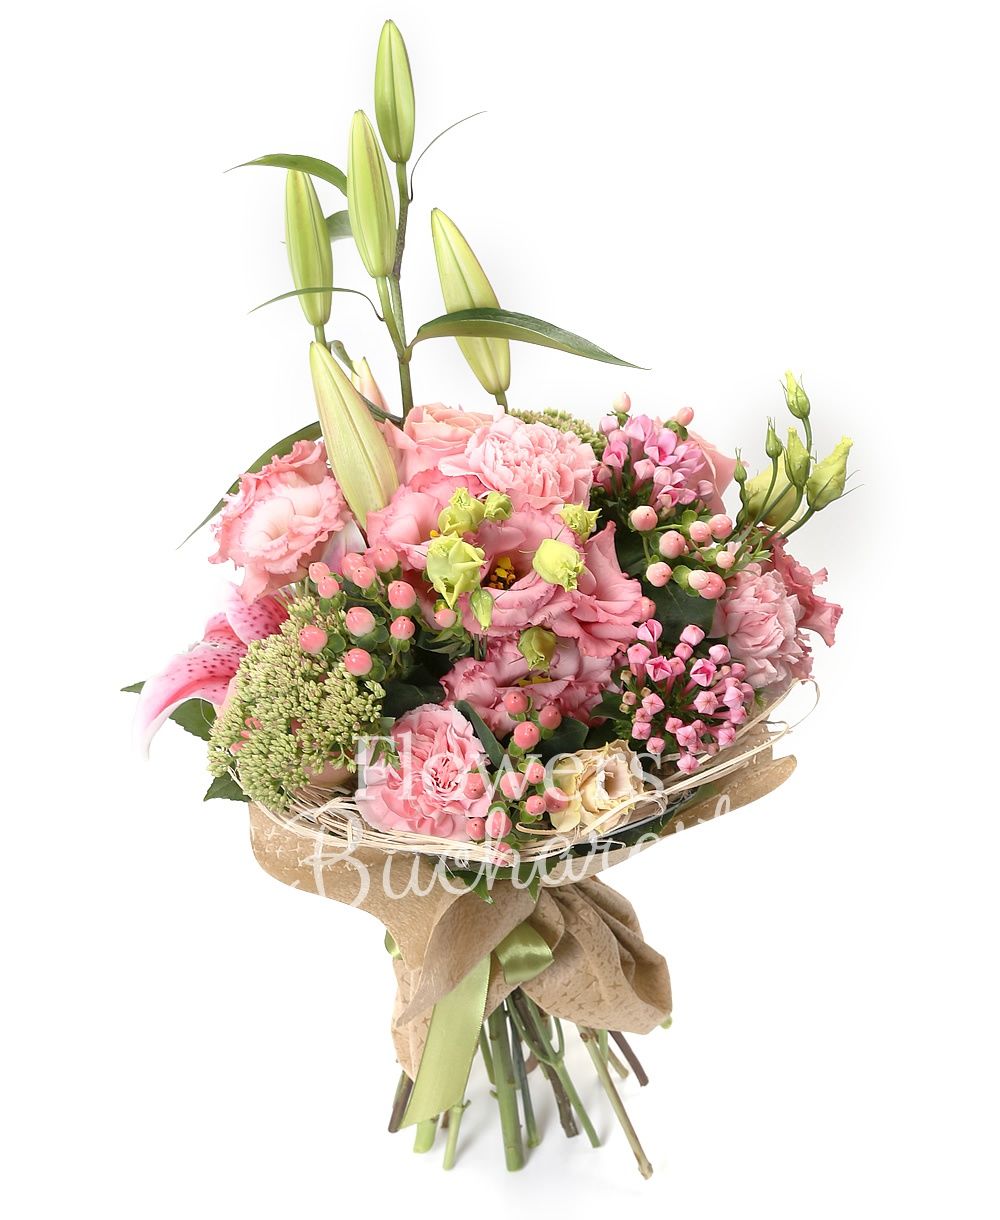 1 pink lily, 3 pink roses, 3 pink lisianthus, 5 pink hypericum, 3 pink bouvardia, 3 pink carnations, 2 sedum, greenery